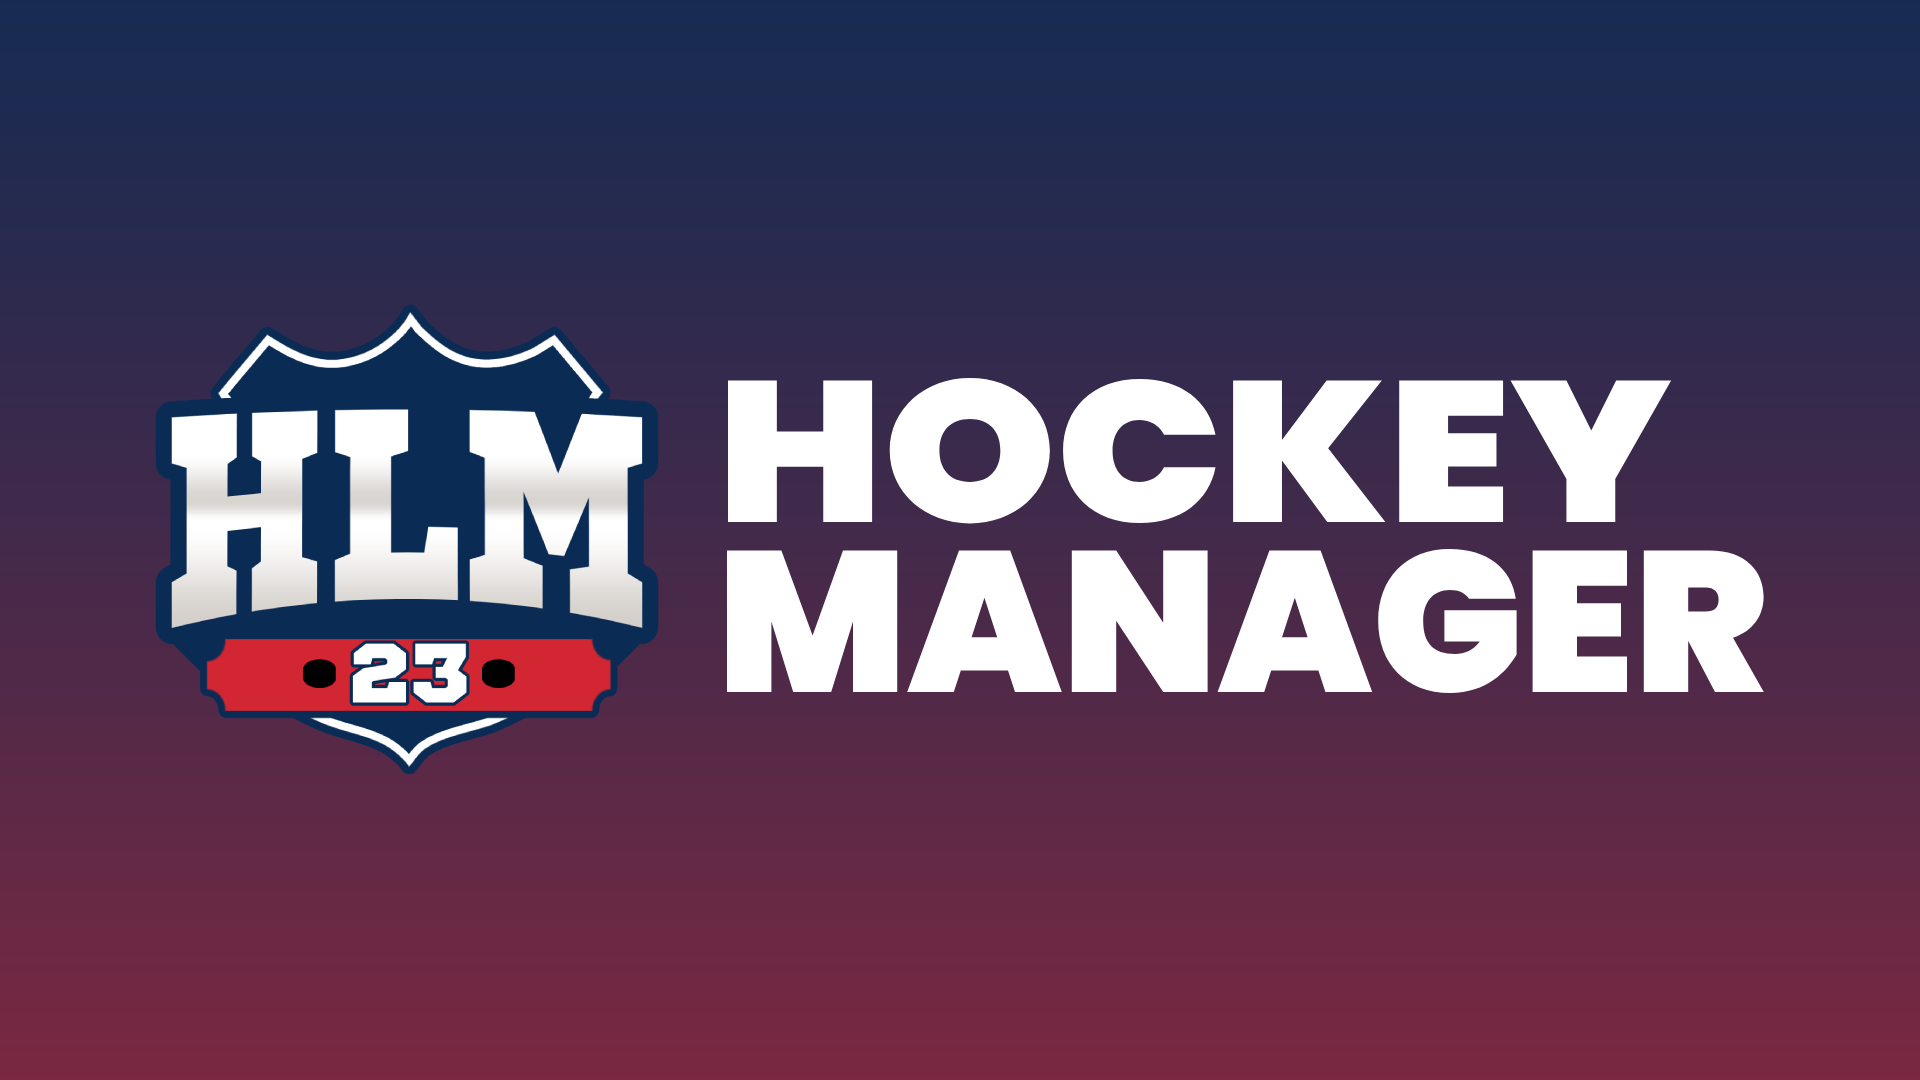 Hockey Gear Checklist, Free Download